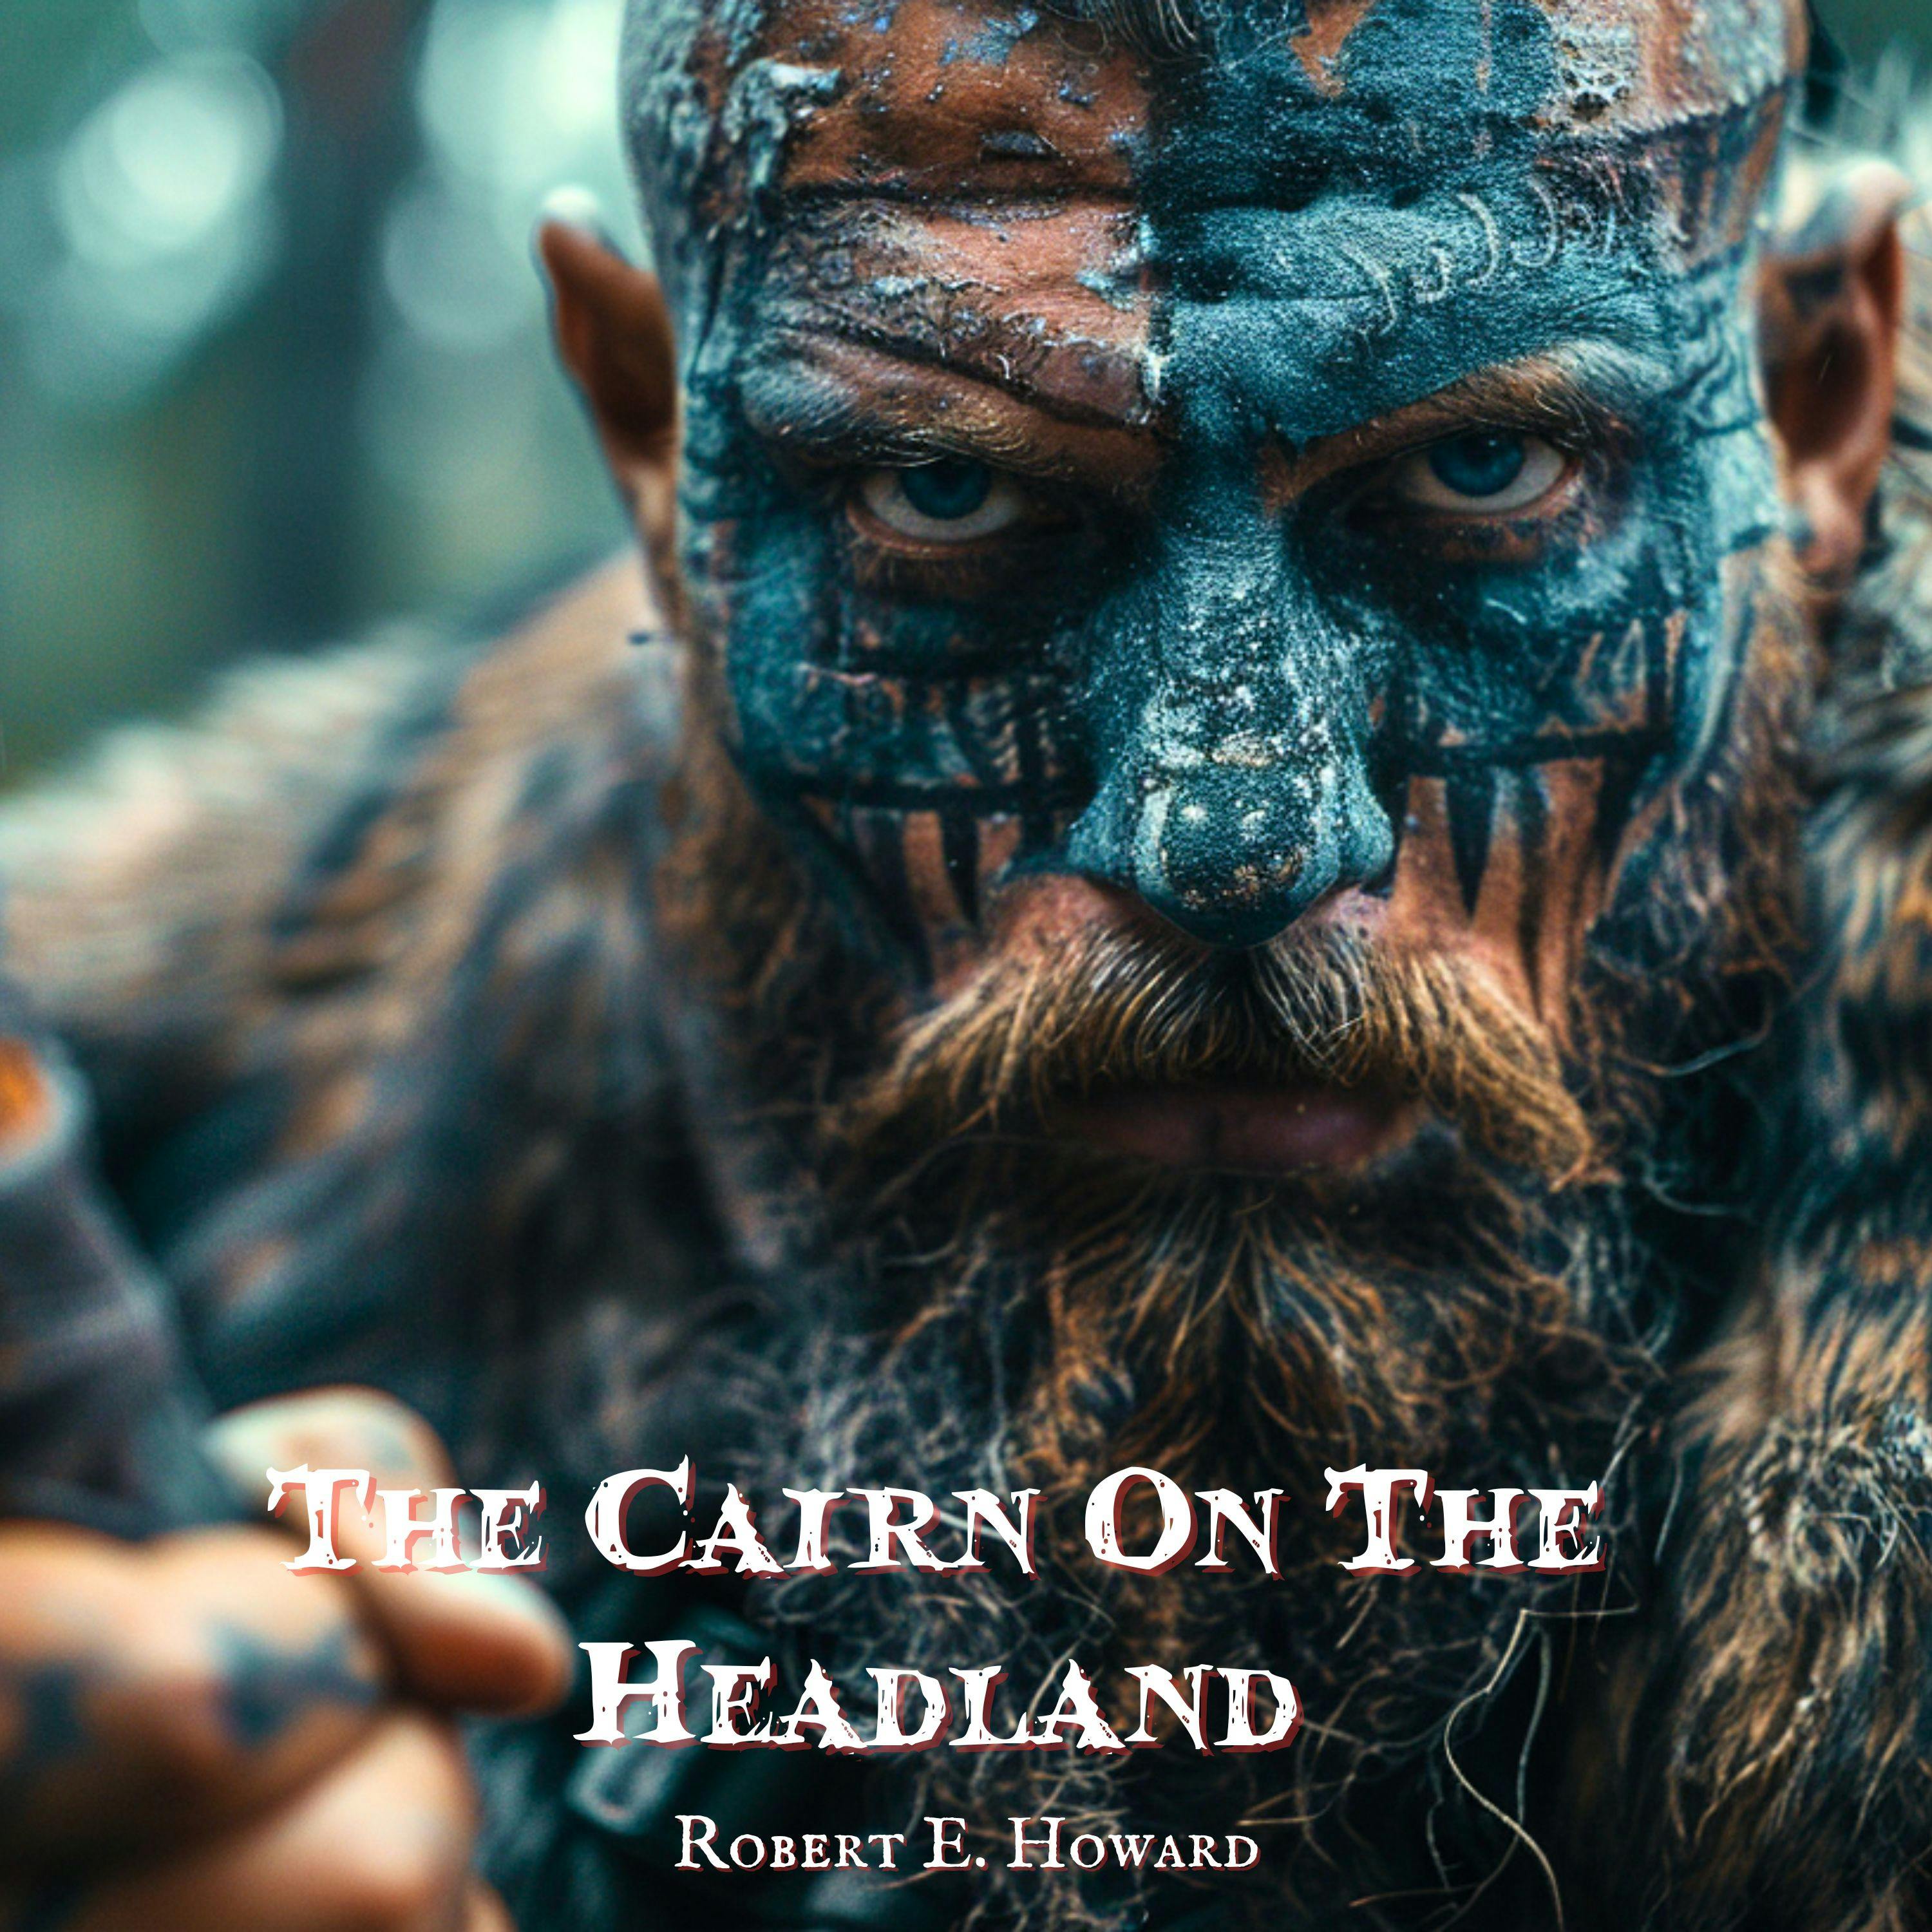 The Cairn on The Headland by Robert E. Howard